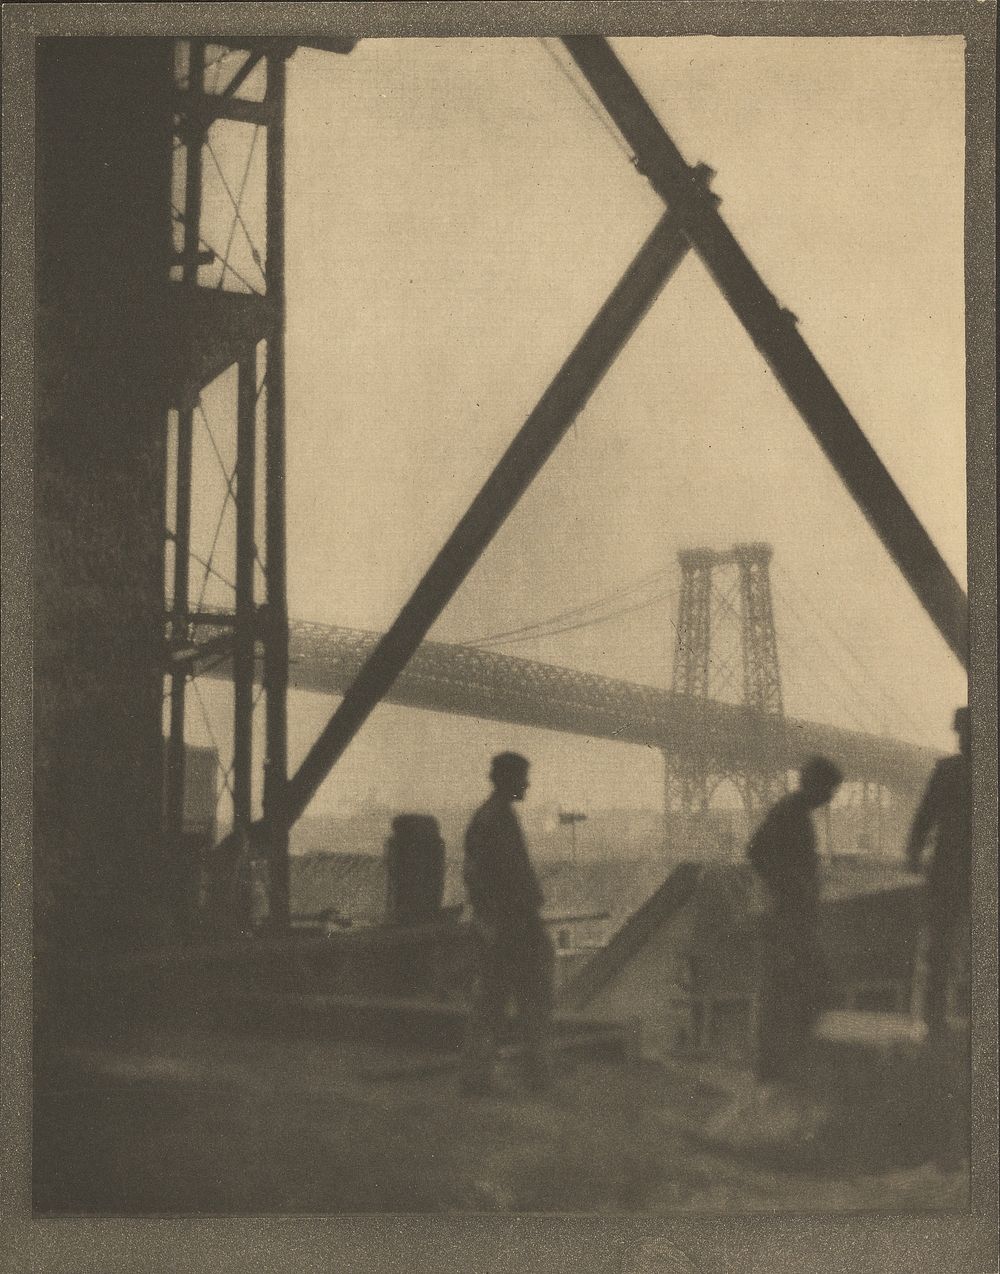 Williamsburg Bridge, New York City by Alvin Langdon Coburn